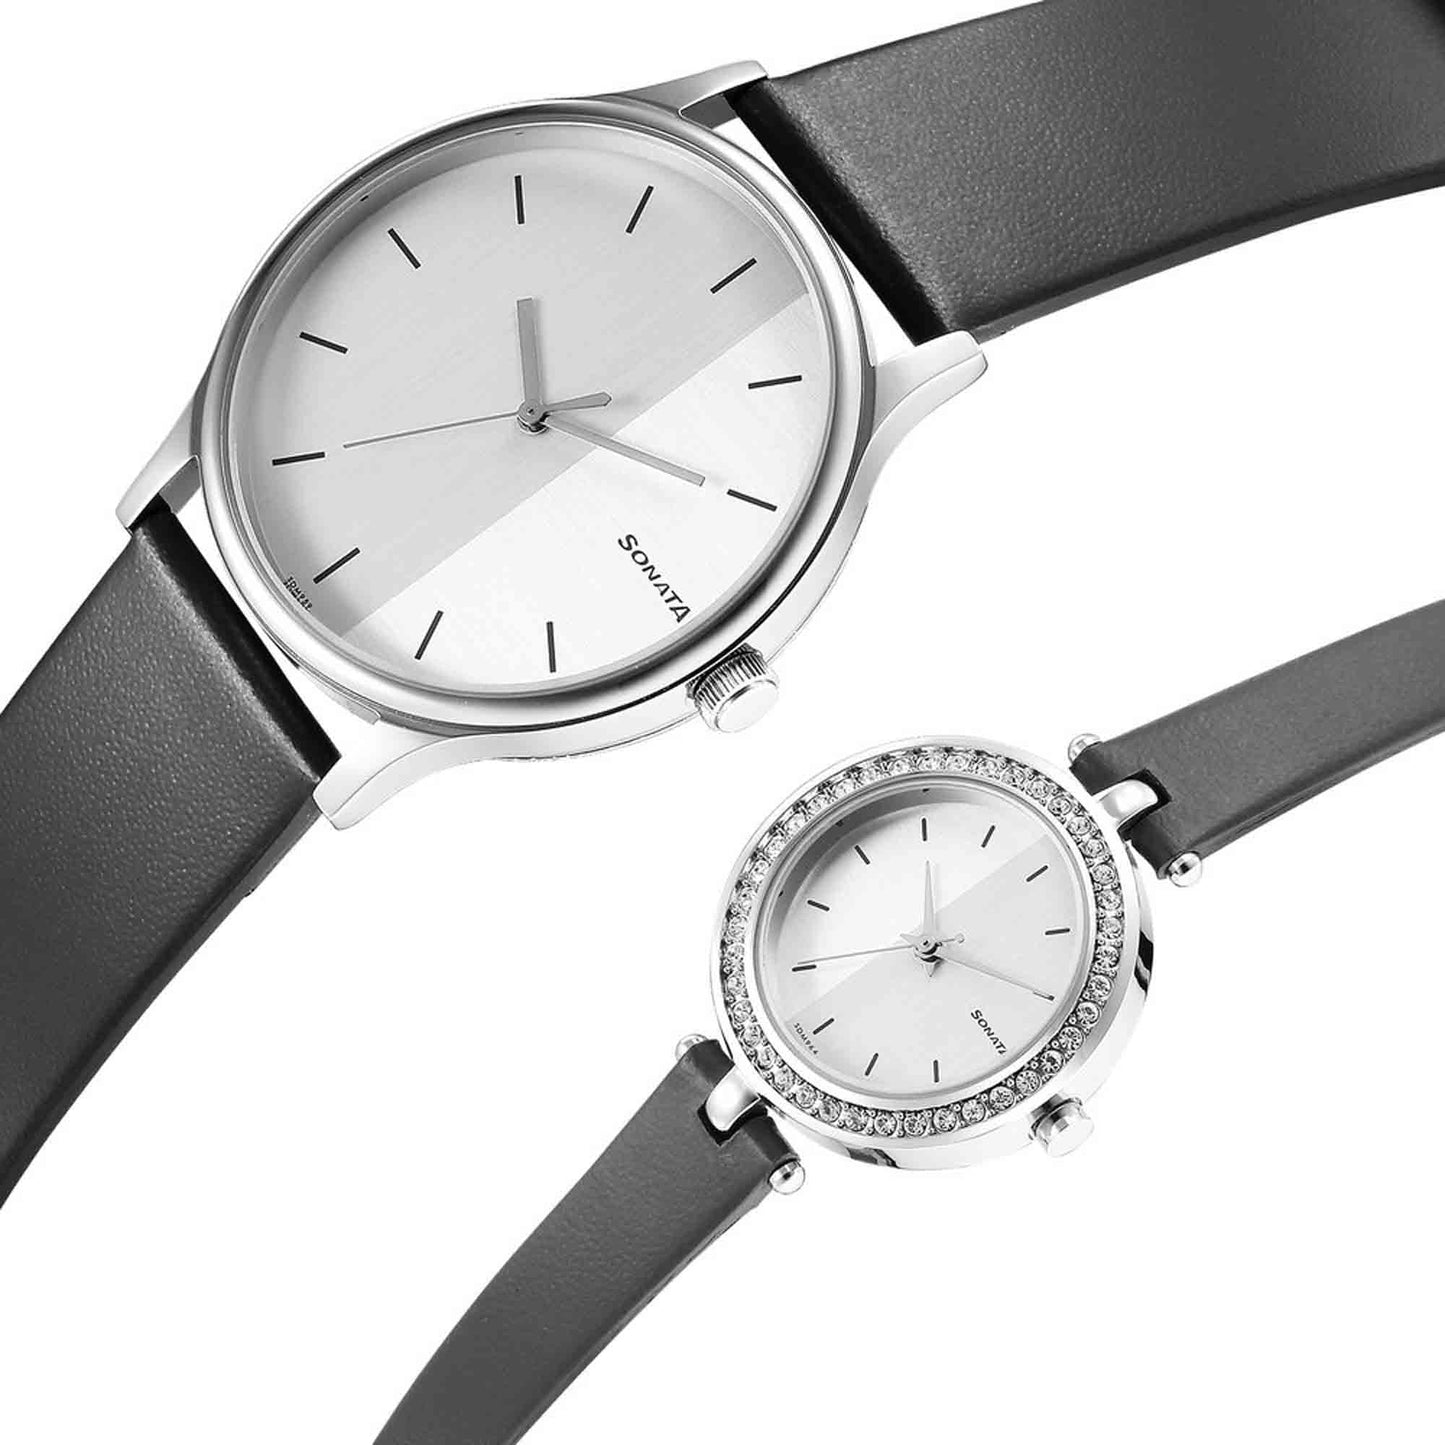 Sonata Quartz Analog Silver Dial Leather Strap Watch for Couple